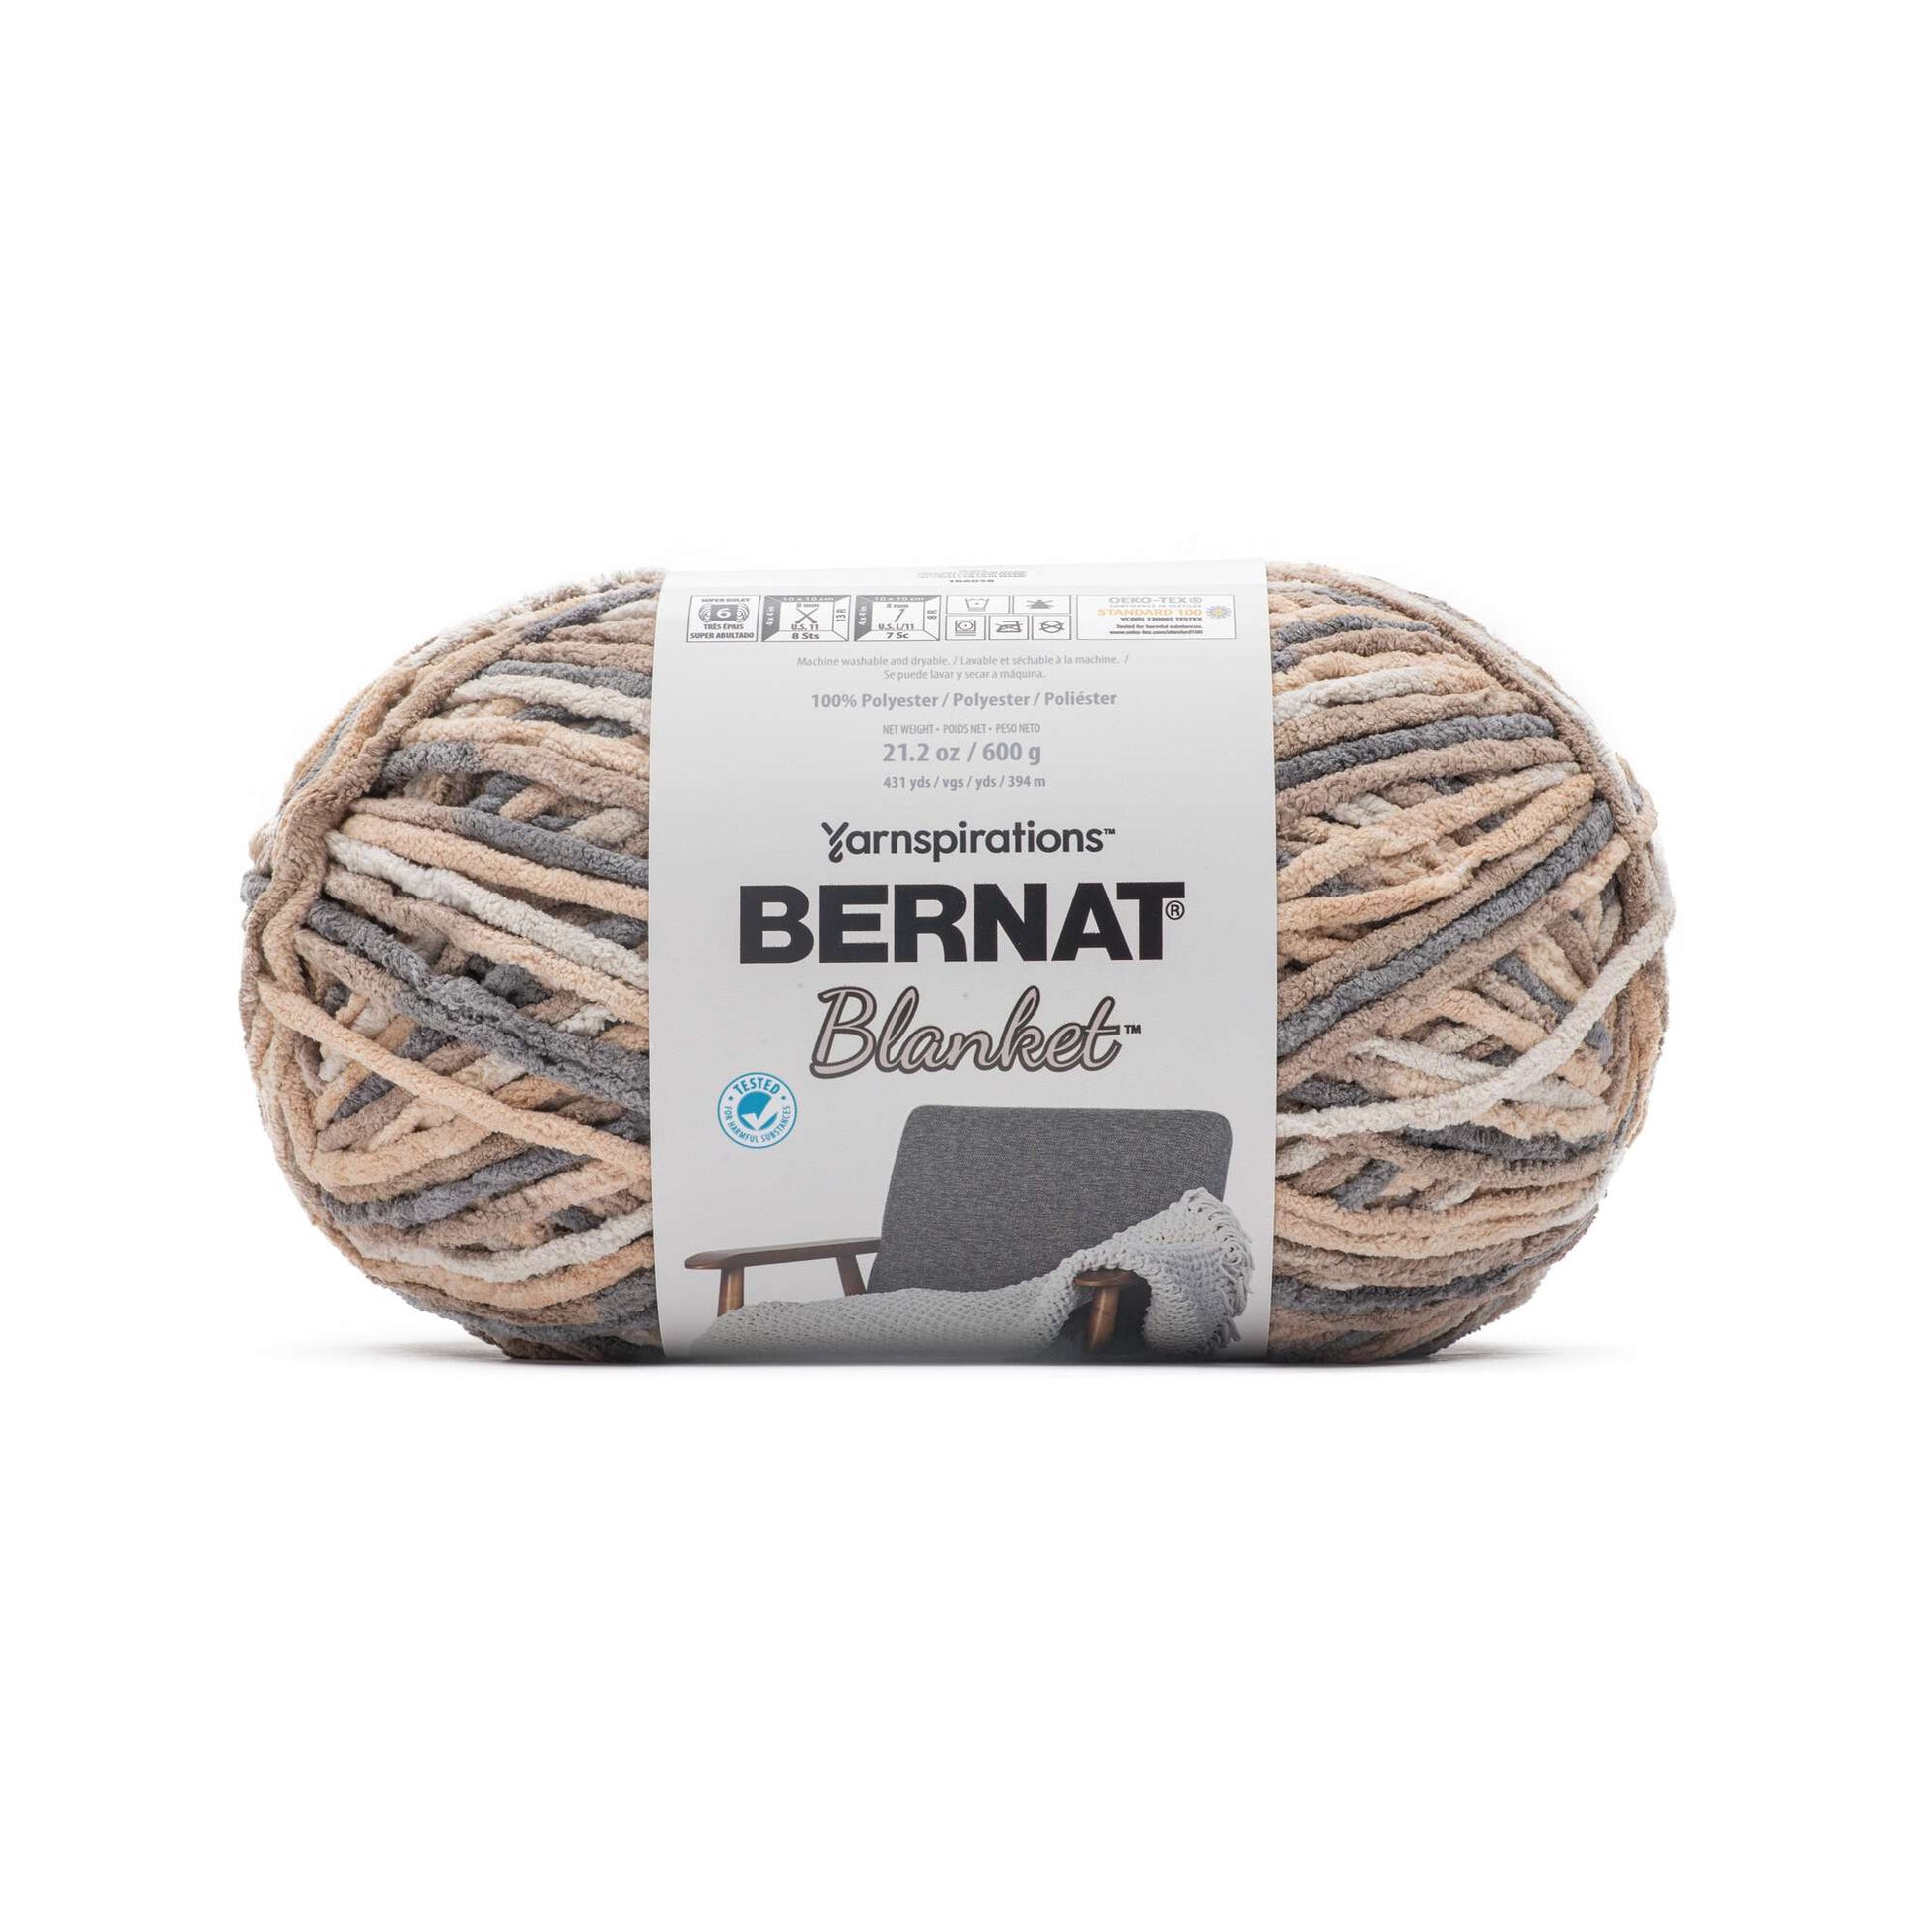 Bernat Blanket Yarn (600g/21.2oz) | Yarnspirations